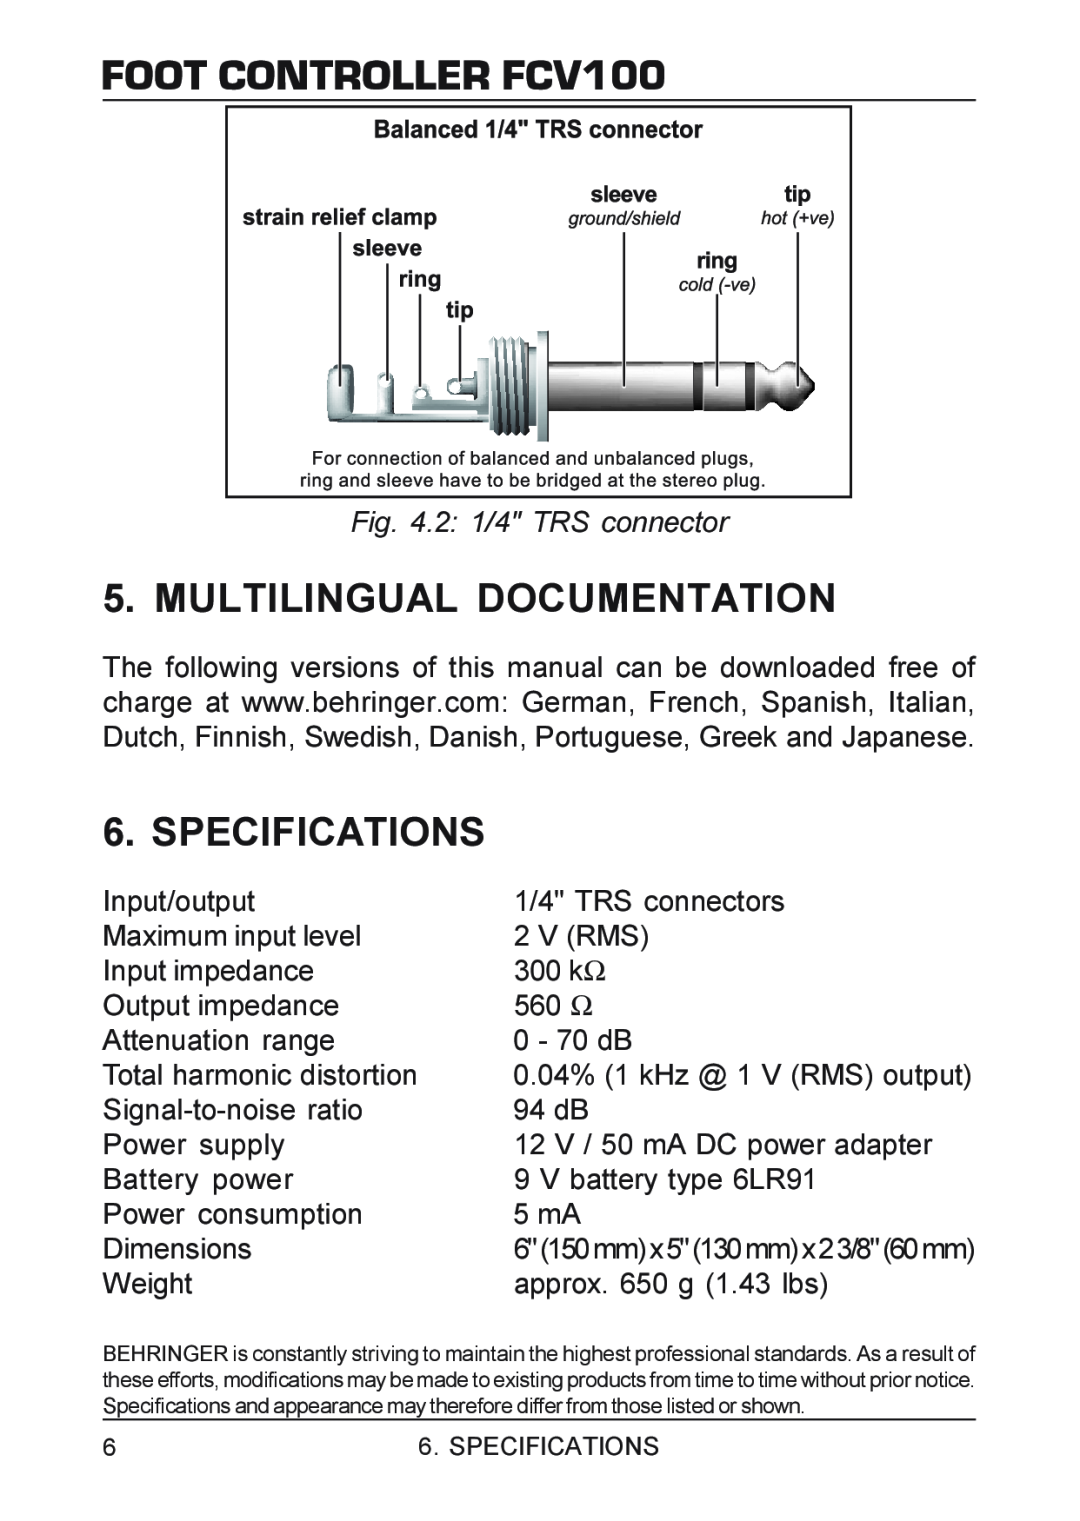 Behringer manual Multilingual Documentation, Specifications, 2 1/4 TRS connector, FOOT CONTROLLER FCV100 